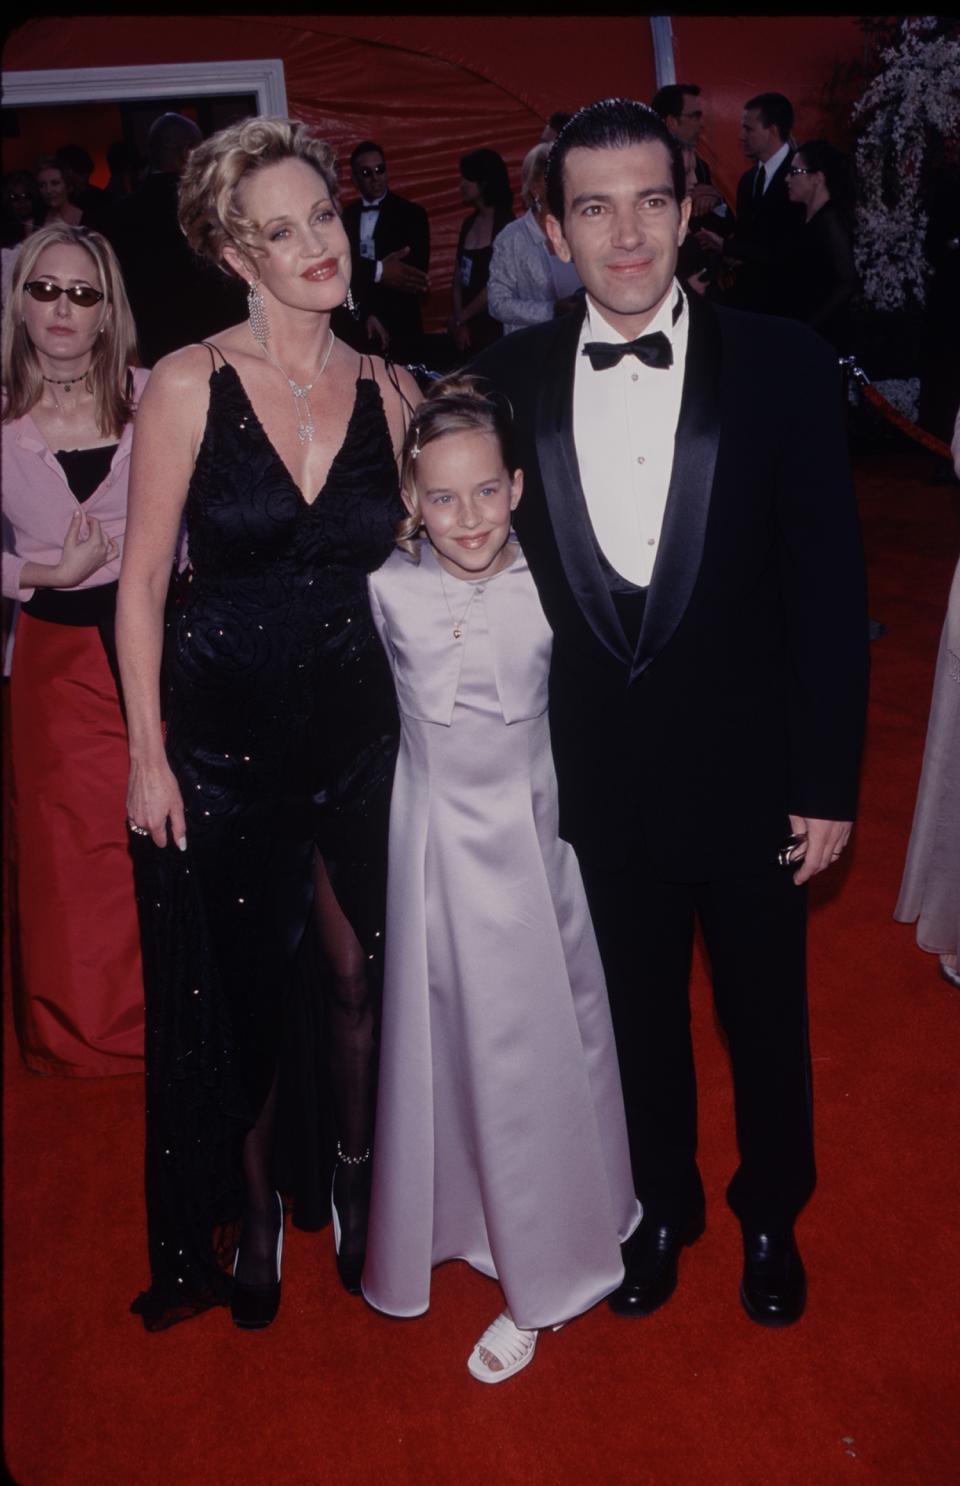 Melanie Griffith, Dakota Johnson, and Antonio Banderas at the 72nd Annual Academy Awards 